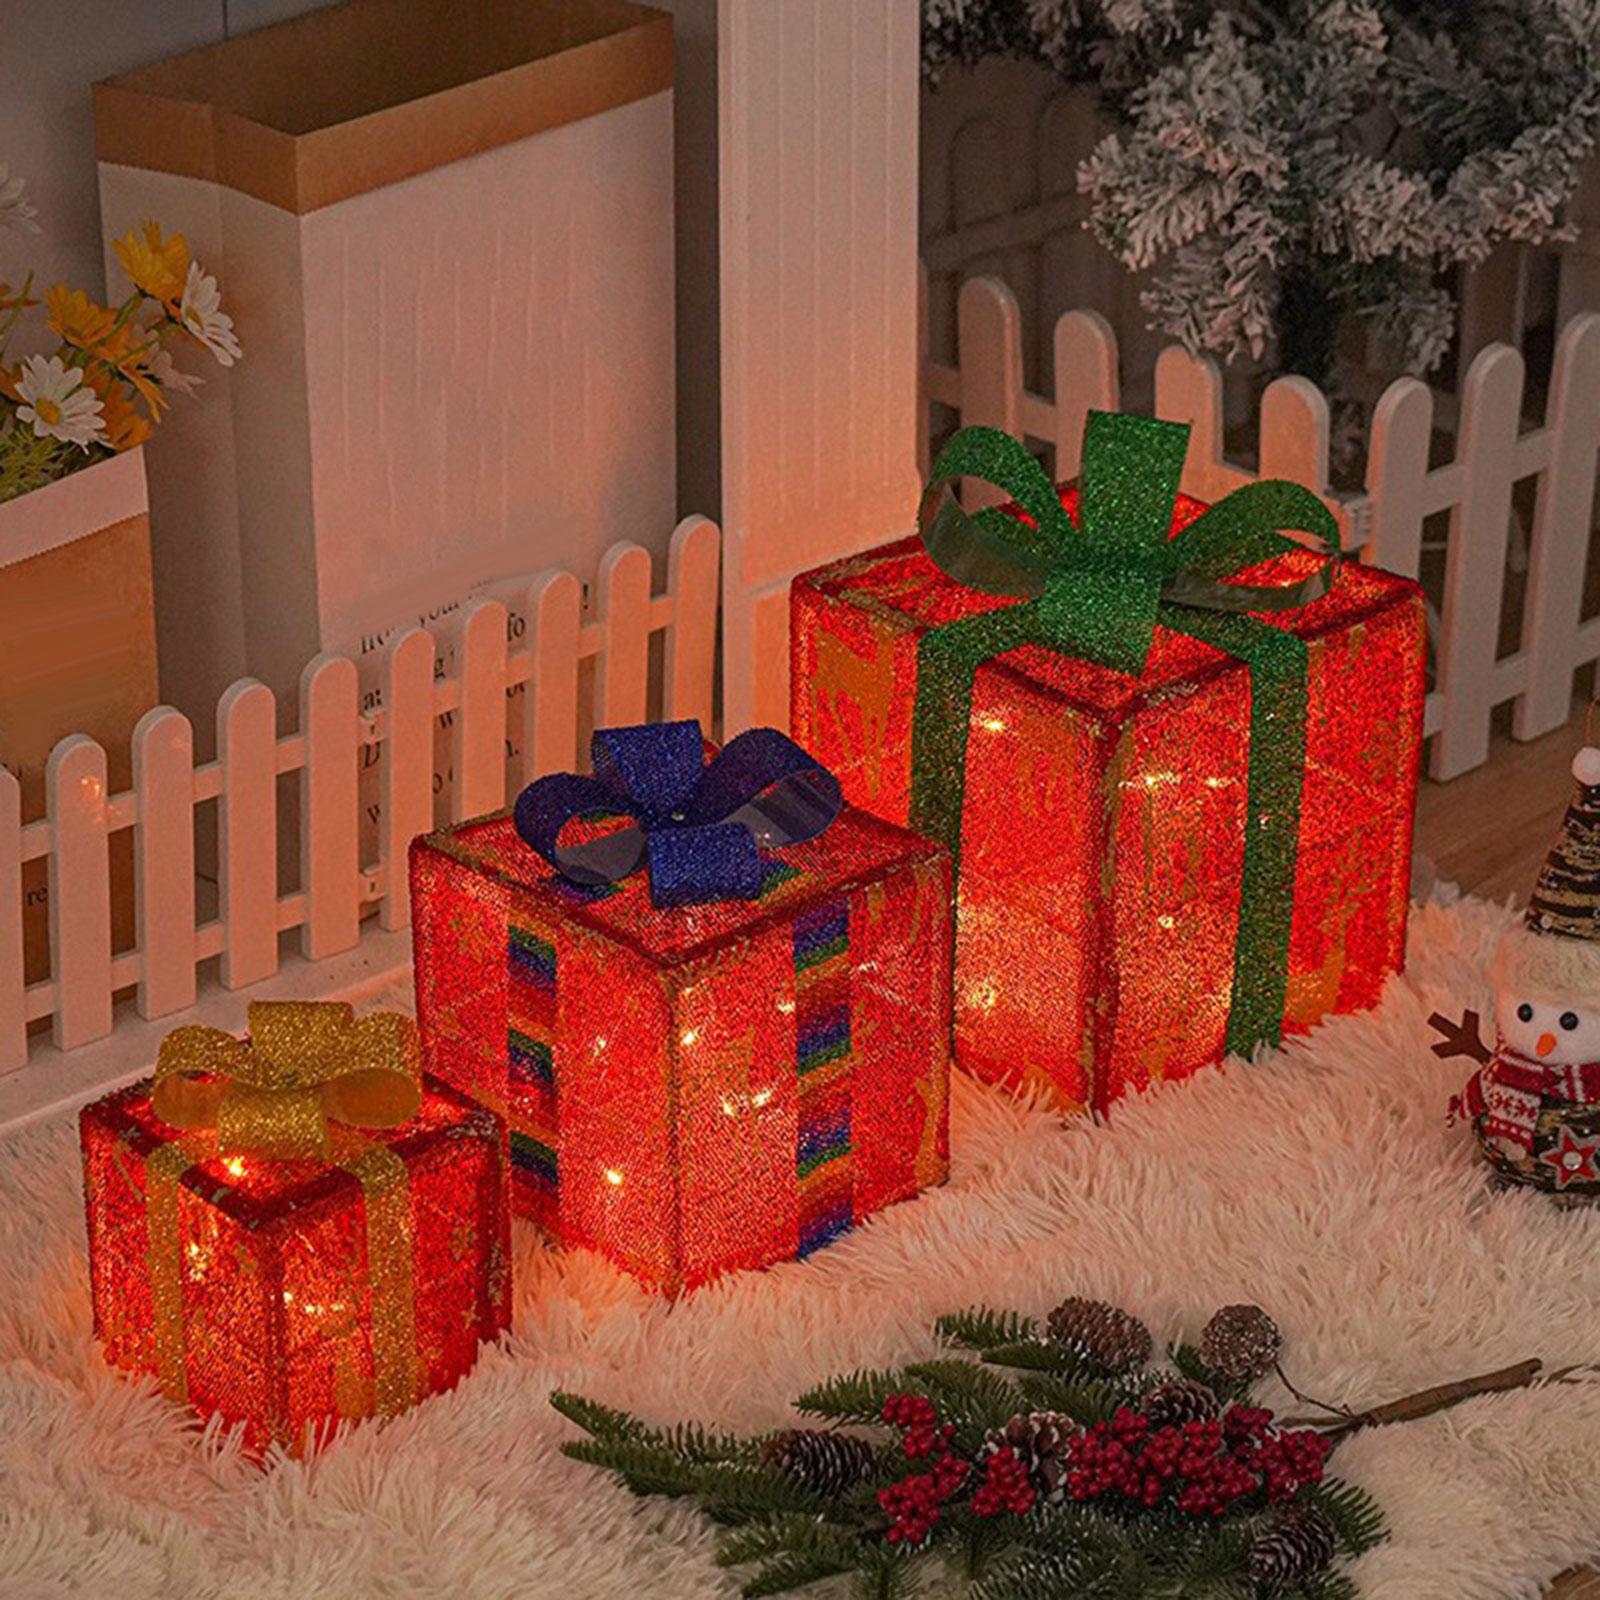 3x Christmas Lighted Gift Boxes, LED Christmas Boxes Set, Christmas Glowing Decoration Gift Boxes, for Restaurants Decoration